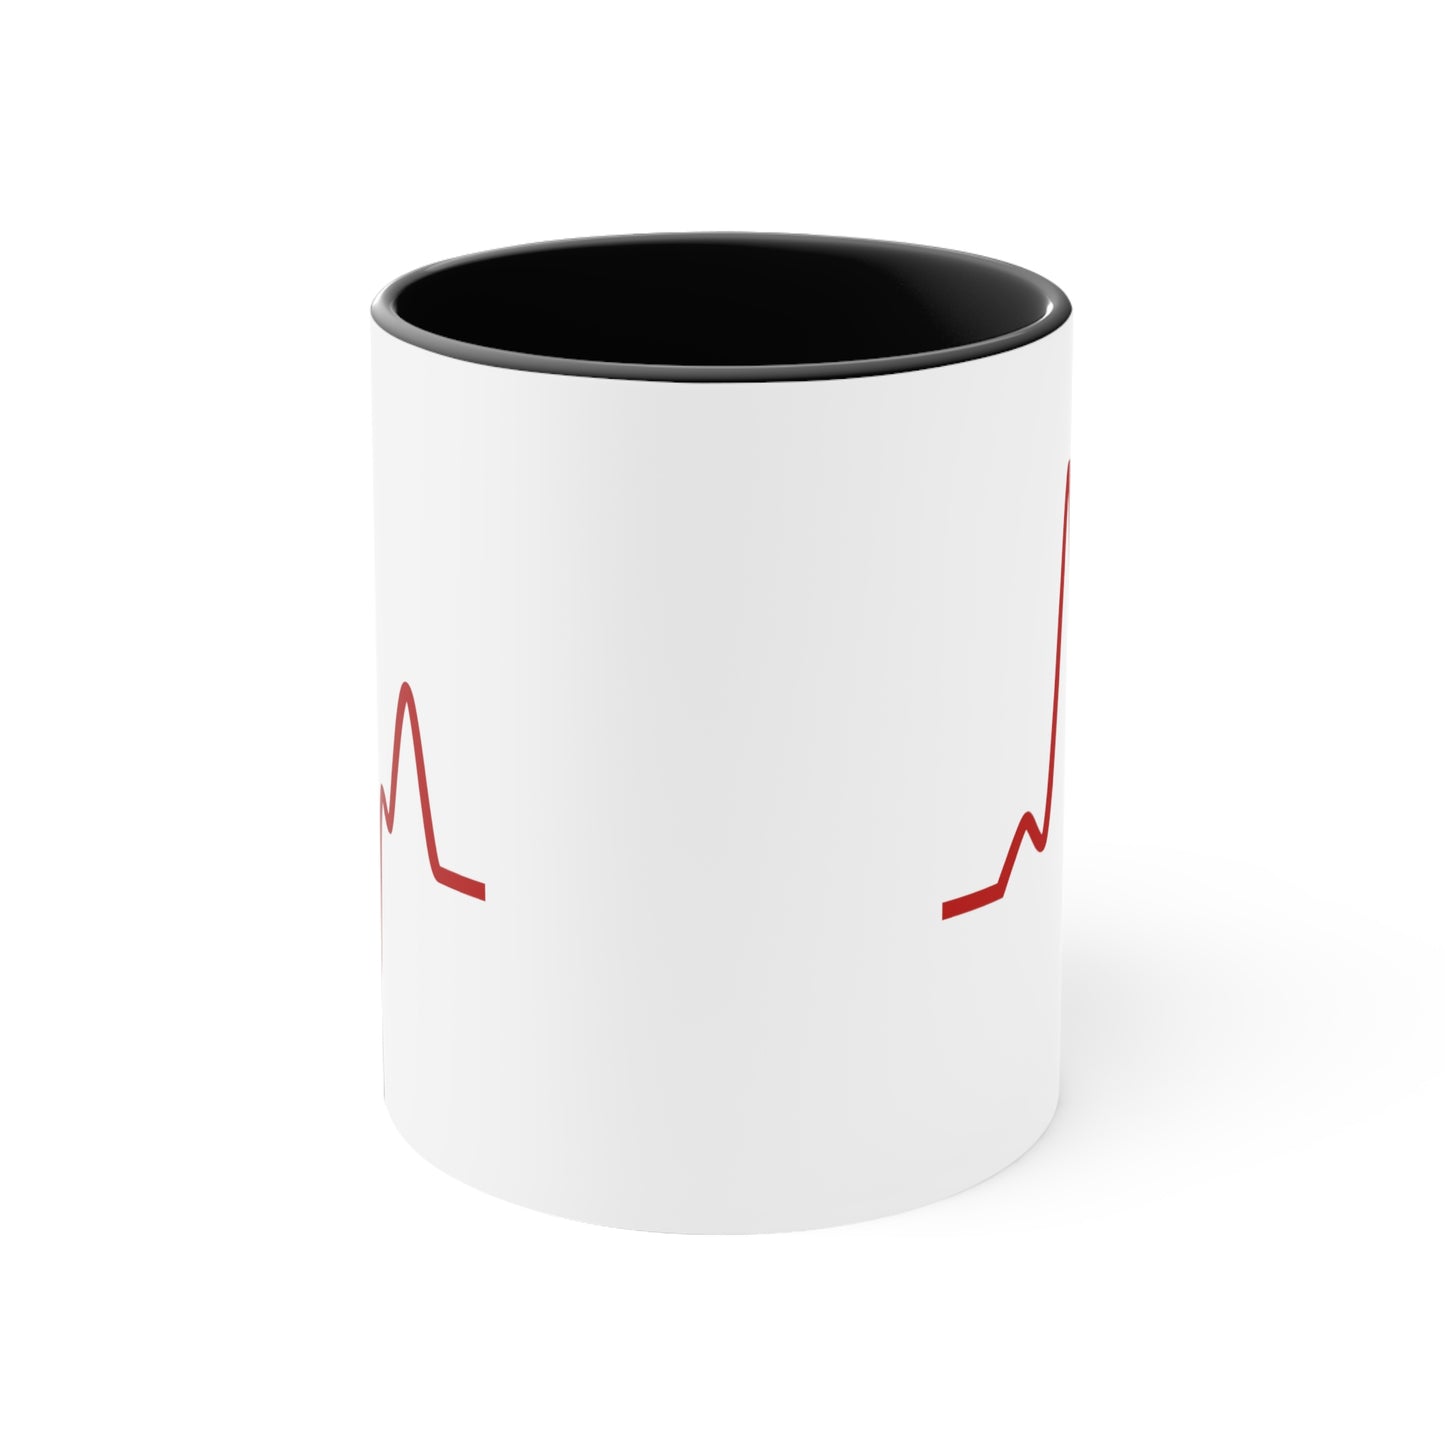 Sine Wave Coffee Mug - Double Sided Black Accent White Ceramic 11oz by TheGlassyLass.com